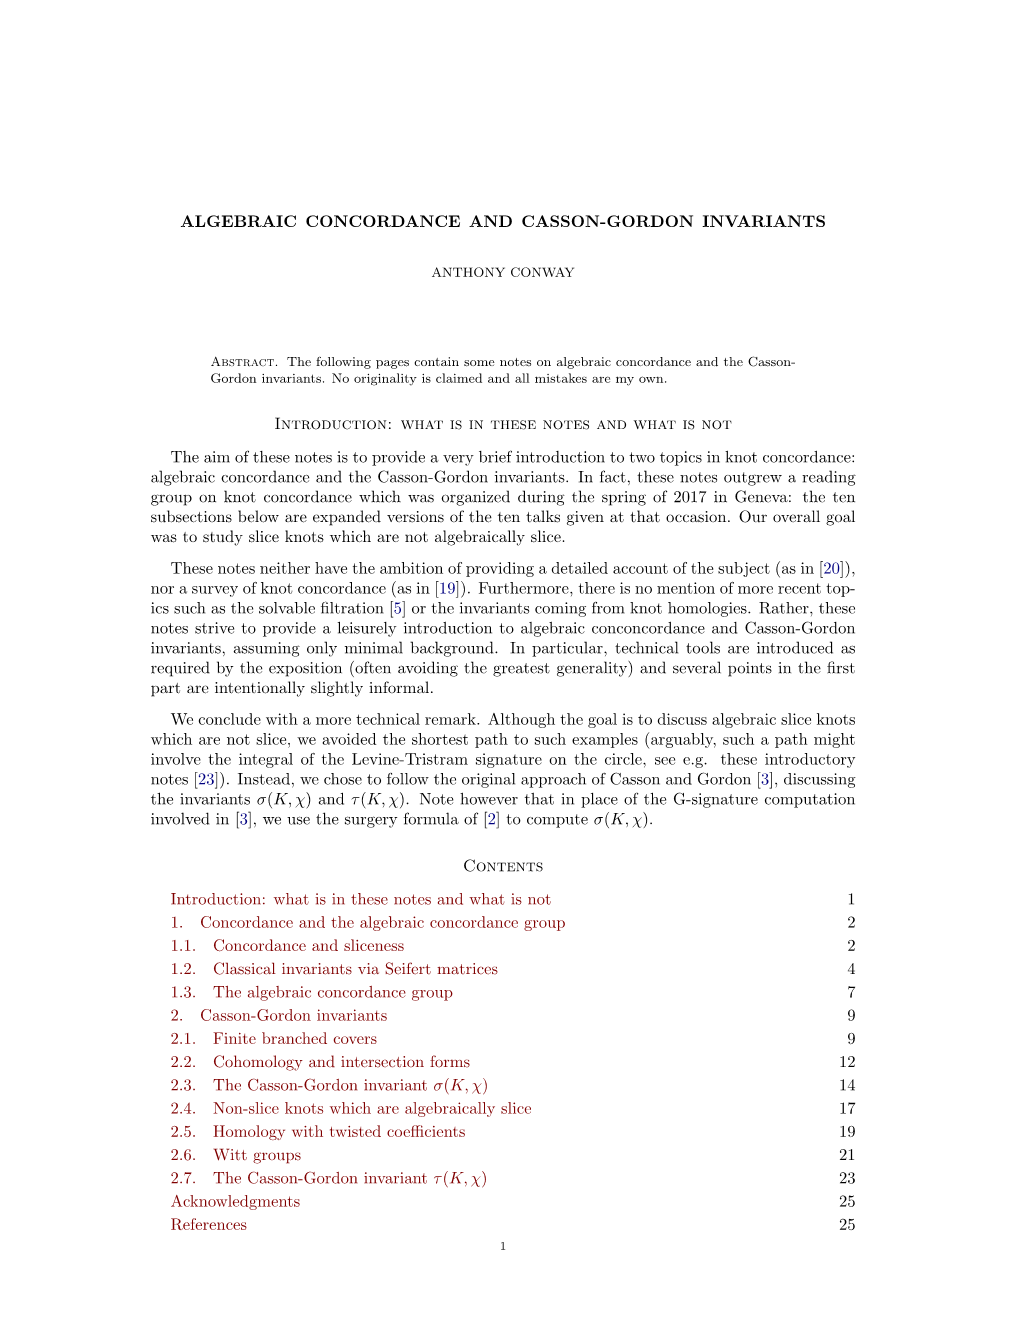 Algebraic Concordance and the Casson-Gordon Invariants